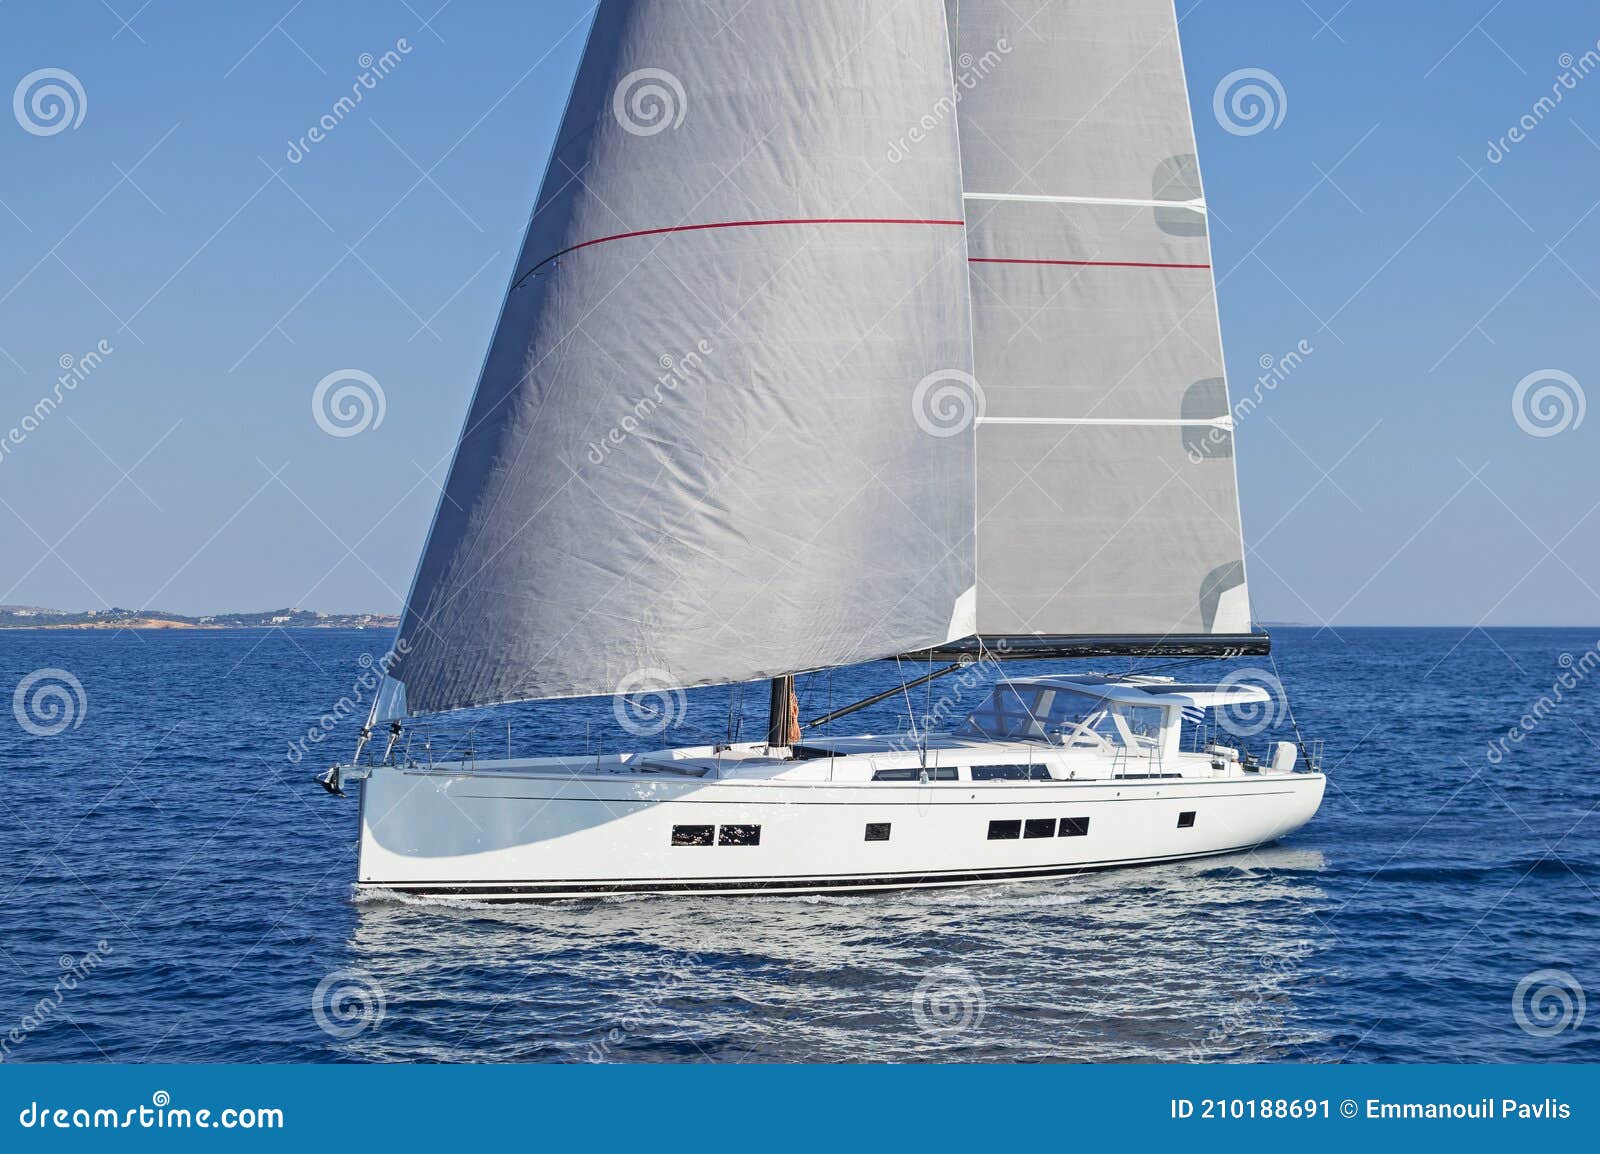 sailing yacht action